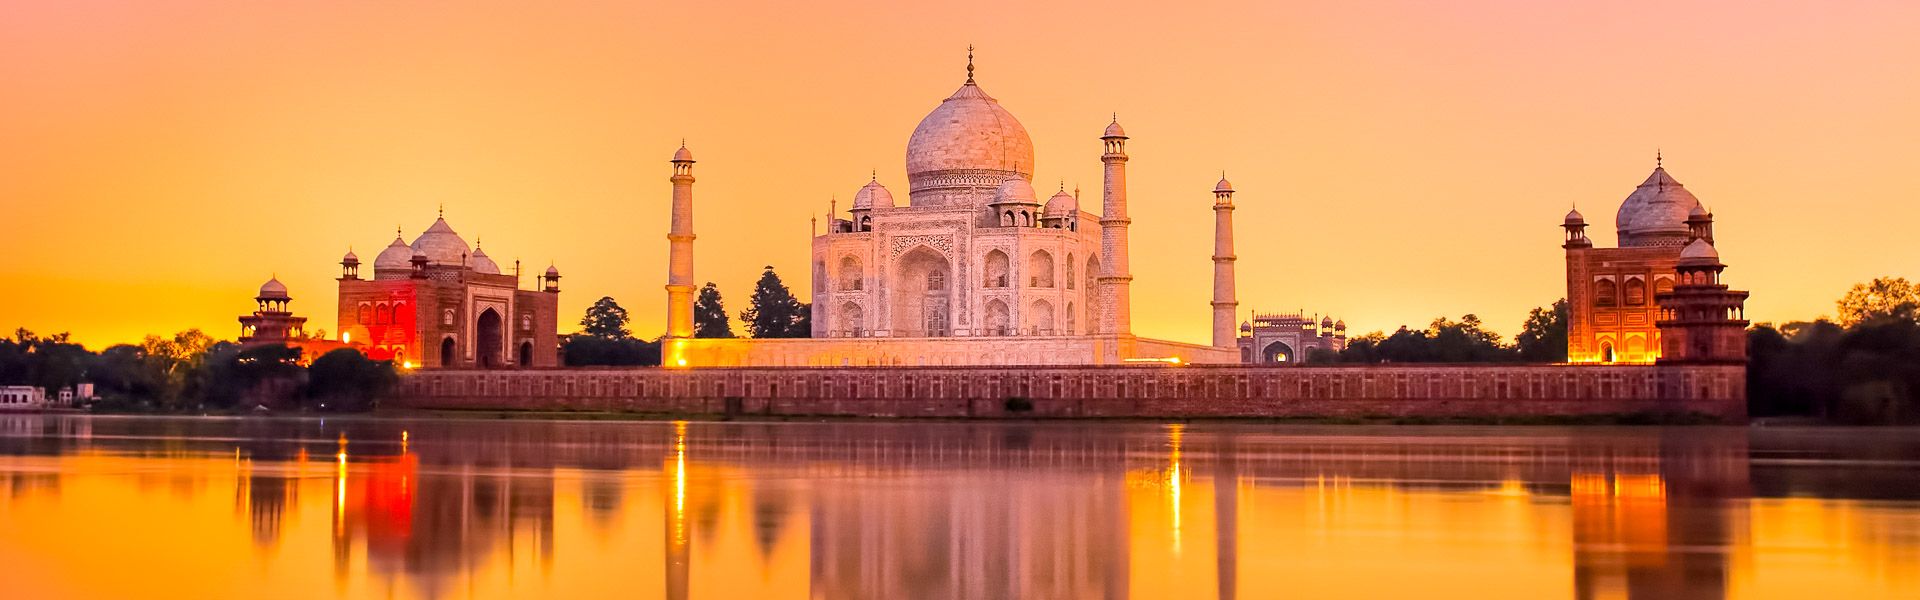 Spiegelung des Taj Mahal zum Sonnenuntergang |  Xantana, iStockphoto.com / Chamleon